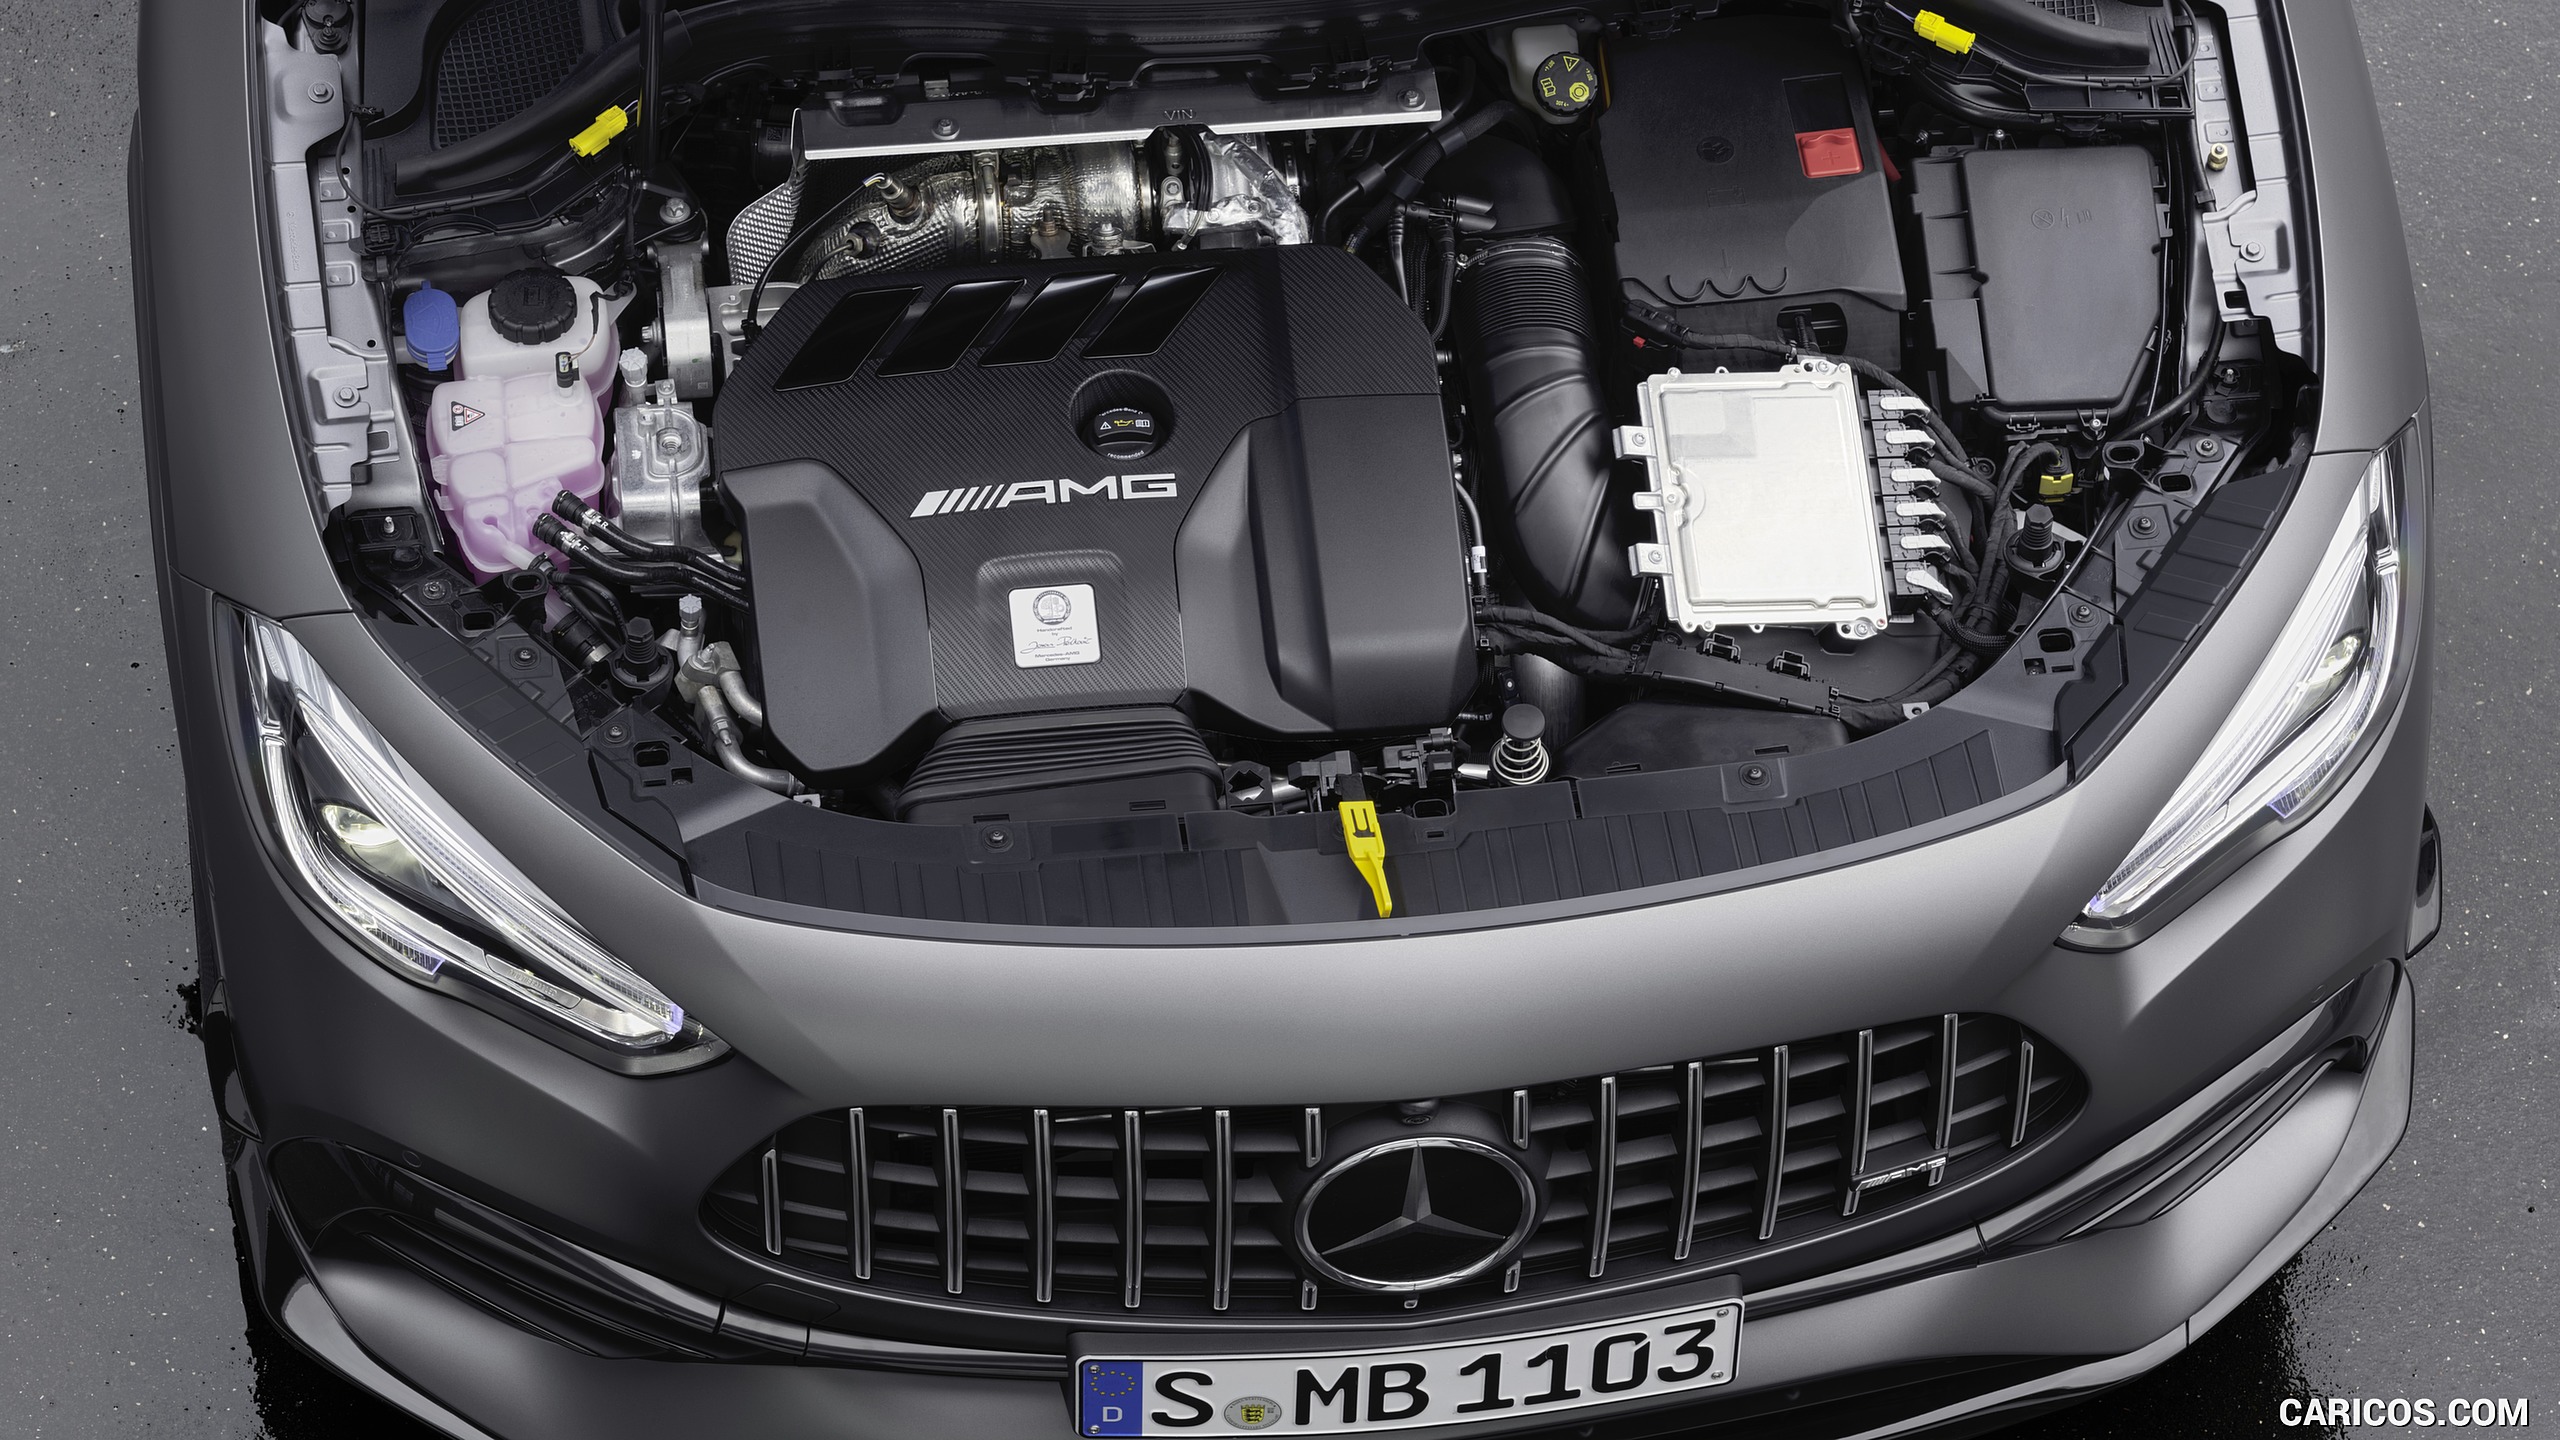 2021 Mercedes-AMG GLA 45 S 4MATIC+ - Engine, #19 of 97